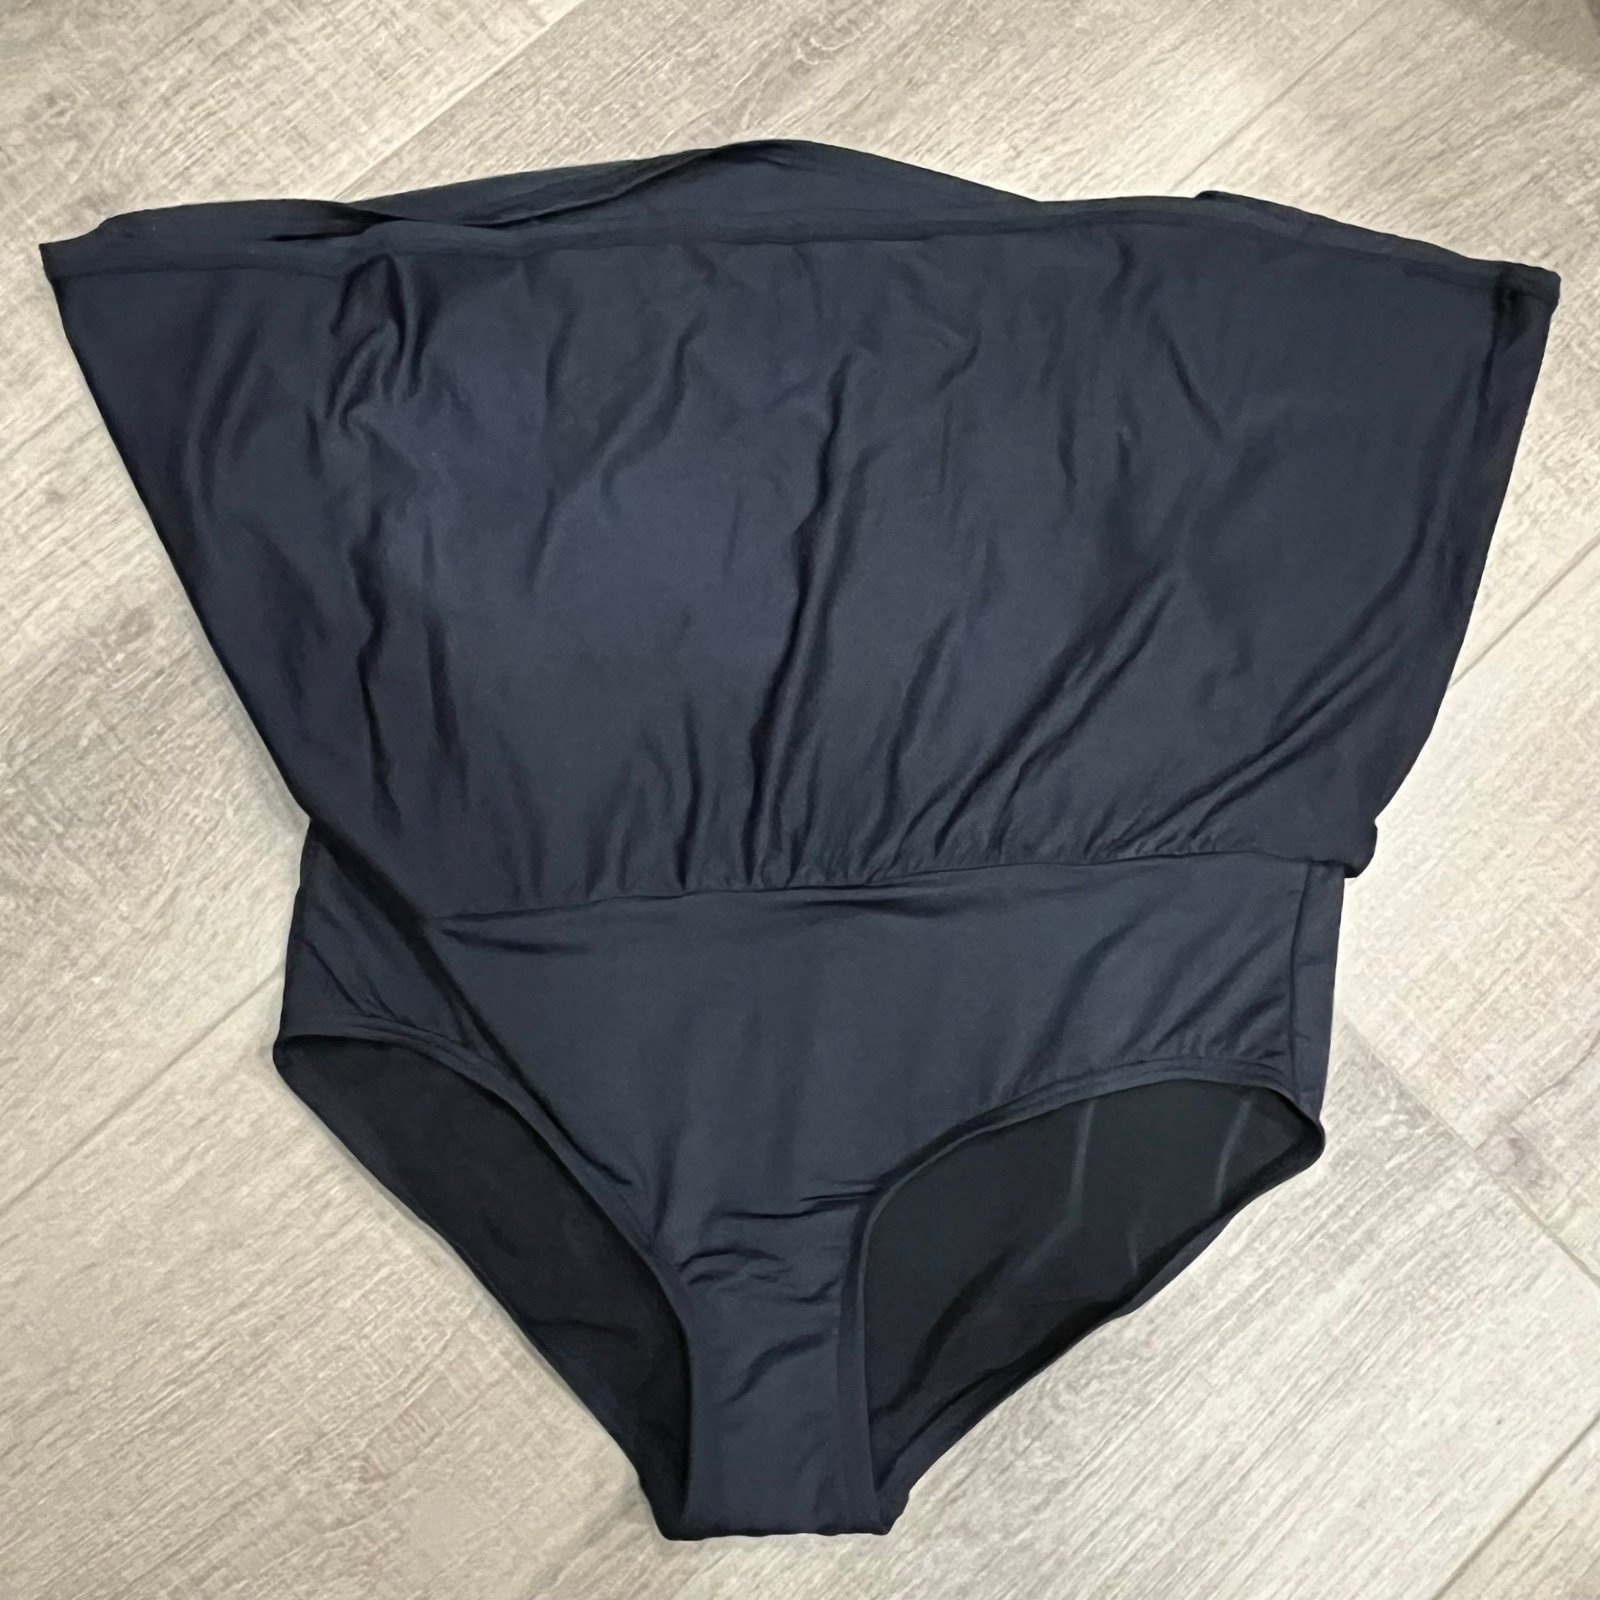 Exclusive Coco Reef Solid Cast Black Swim Skirt Skort U95396 Medium Bikini Bottom NWT $68 oeAER8VW1 Store Online